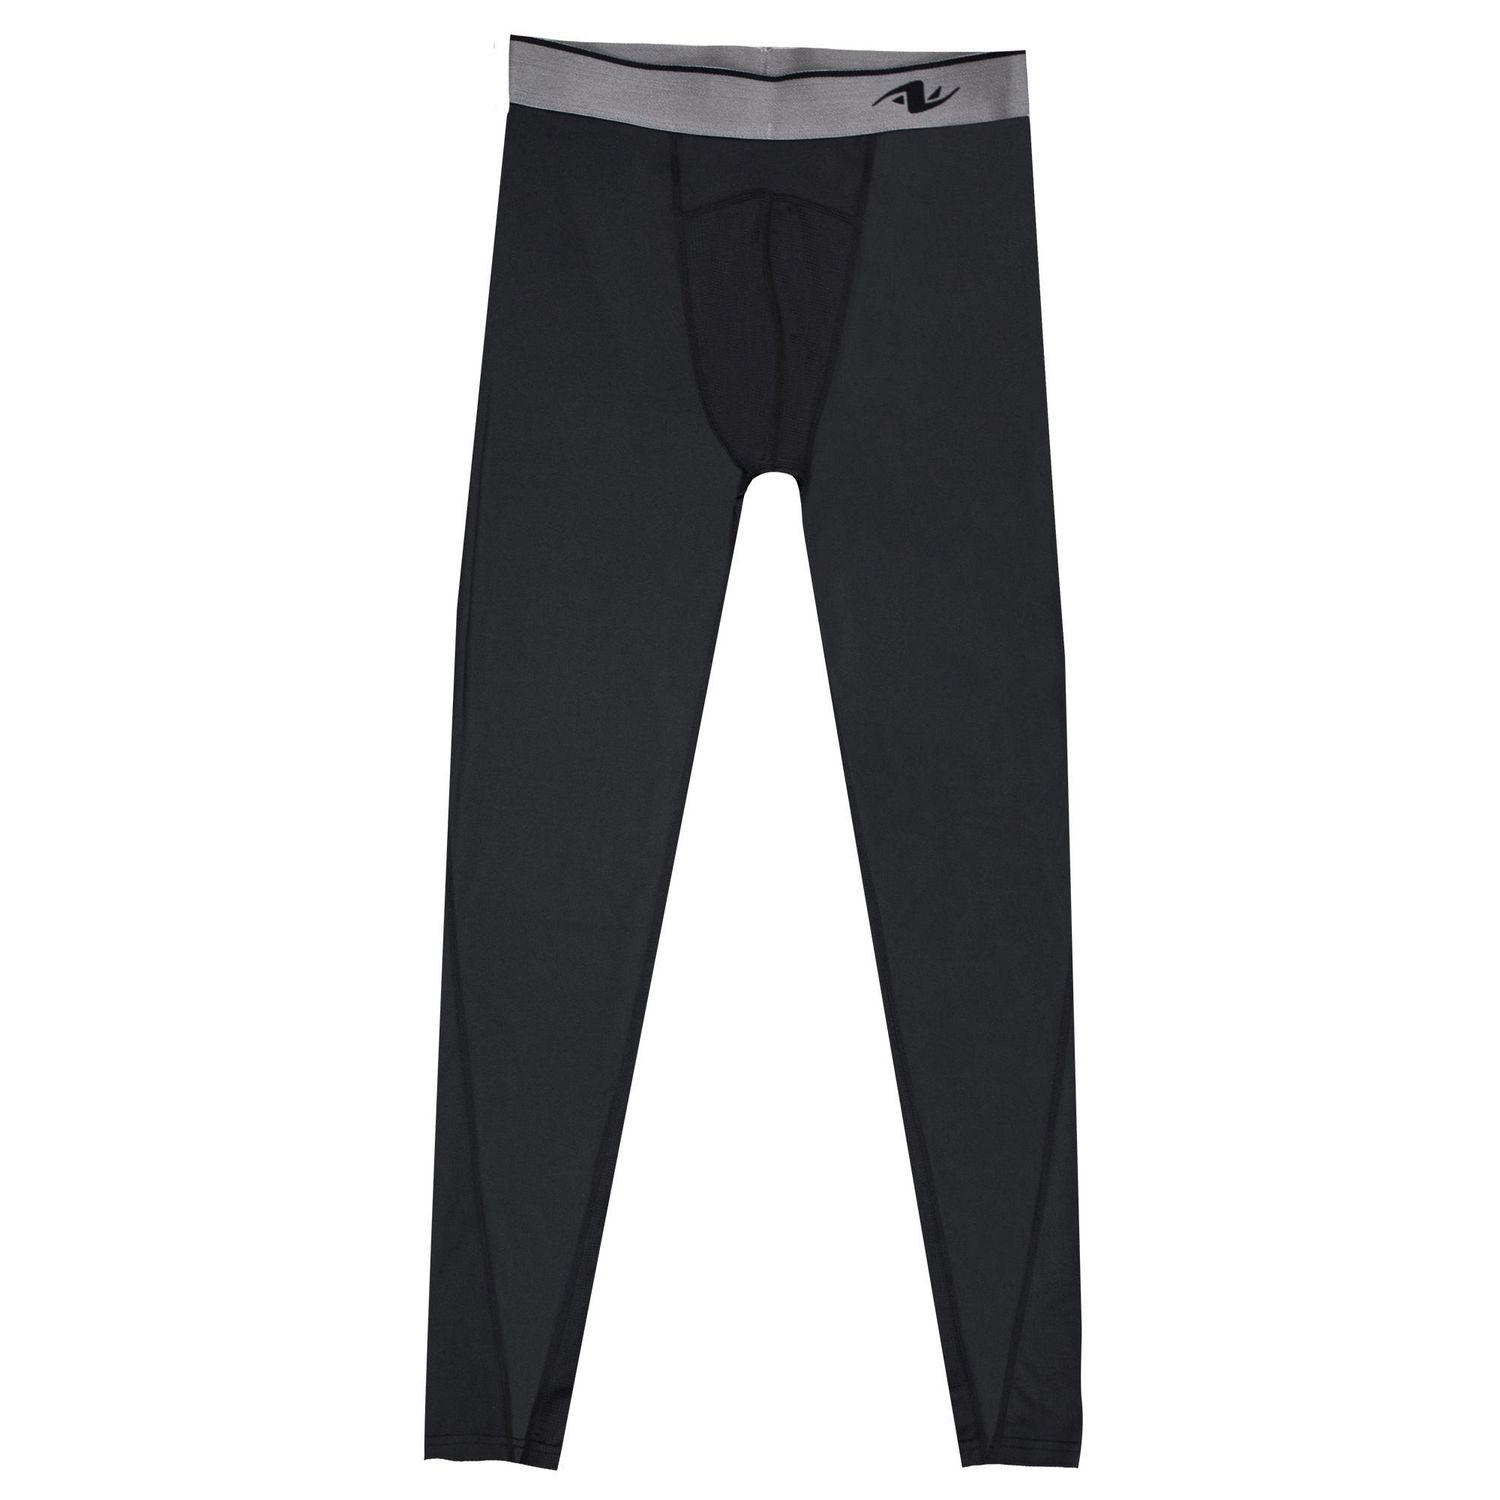 Athletic Works Men S Underwear Compression Pants Walmart Canada